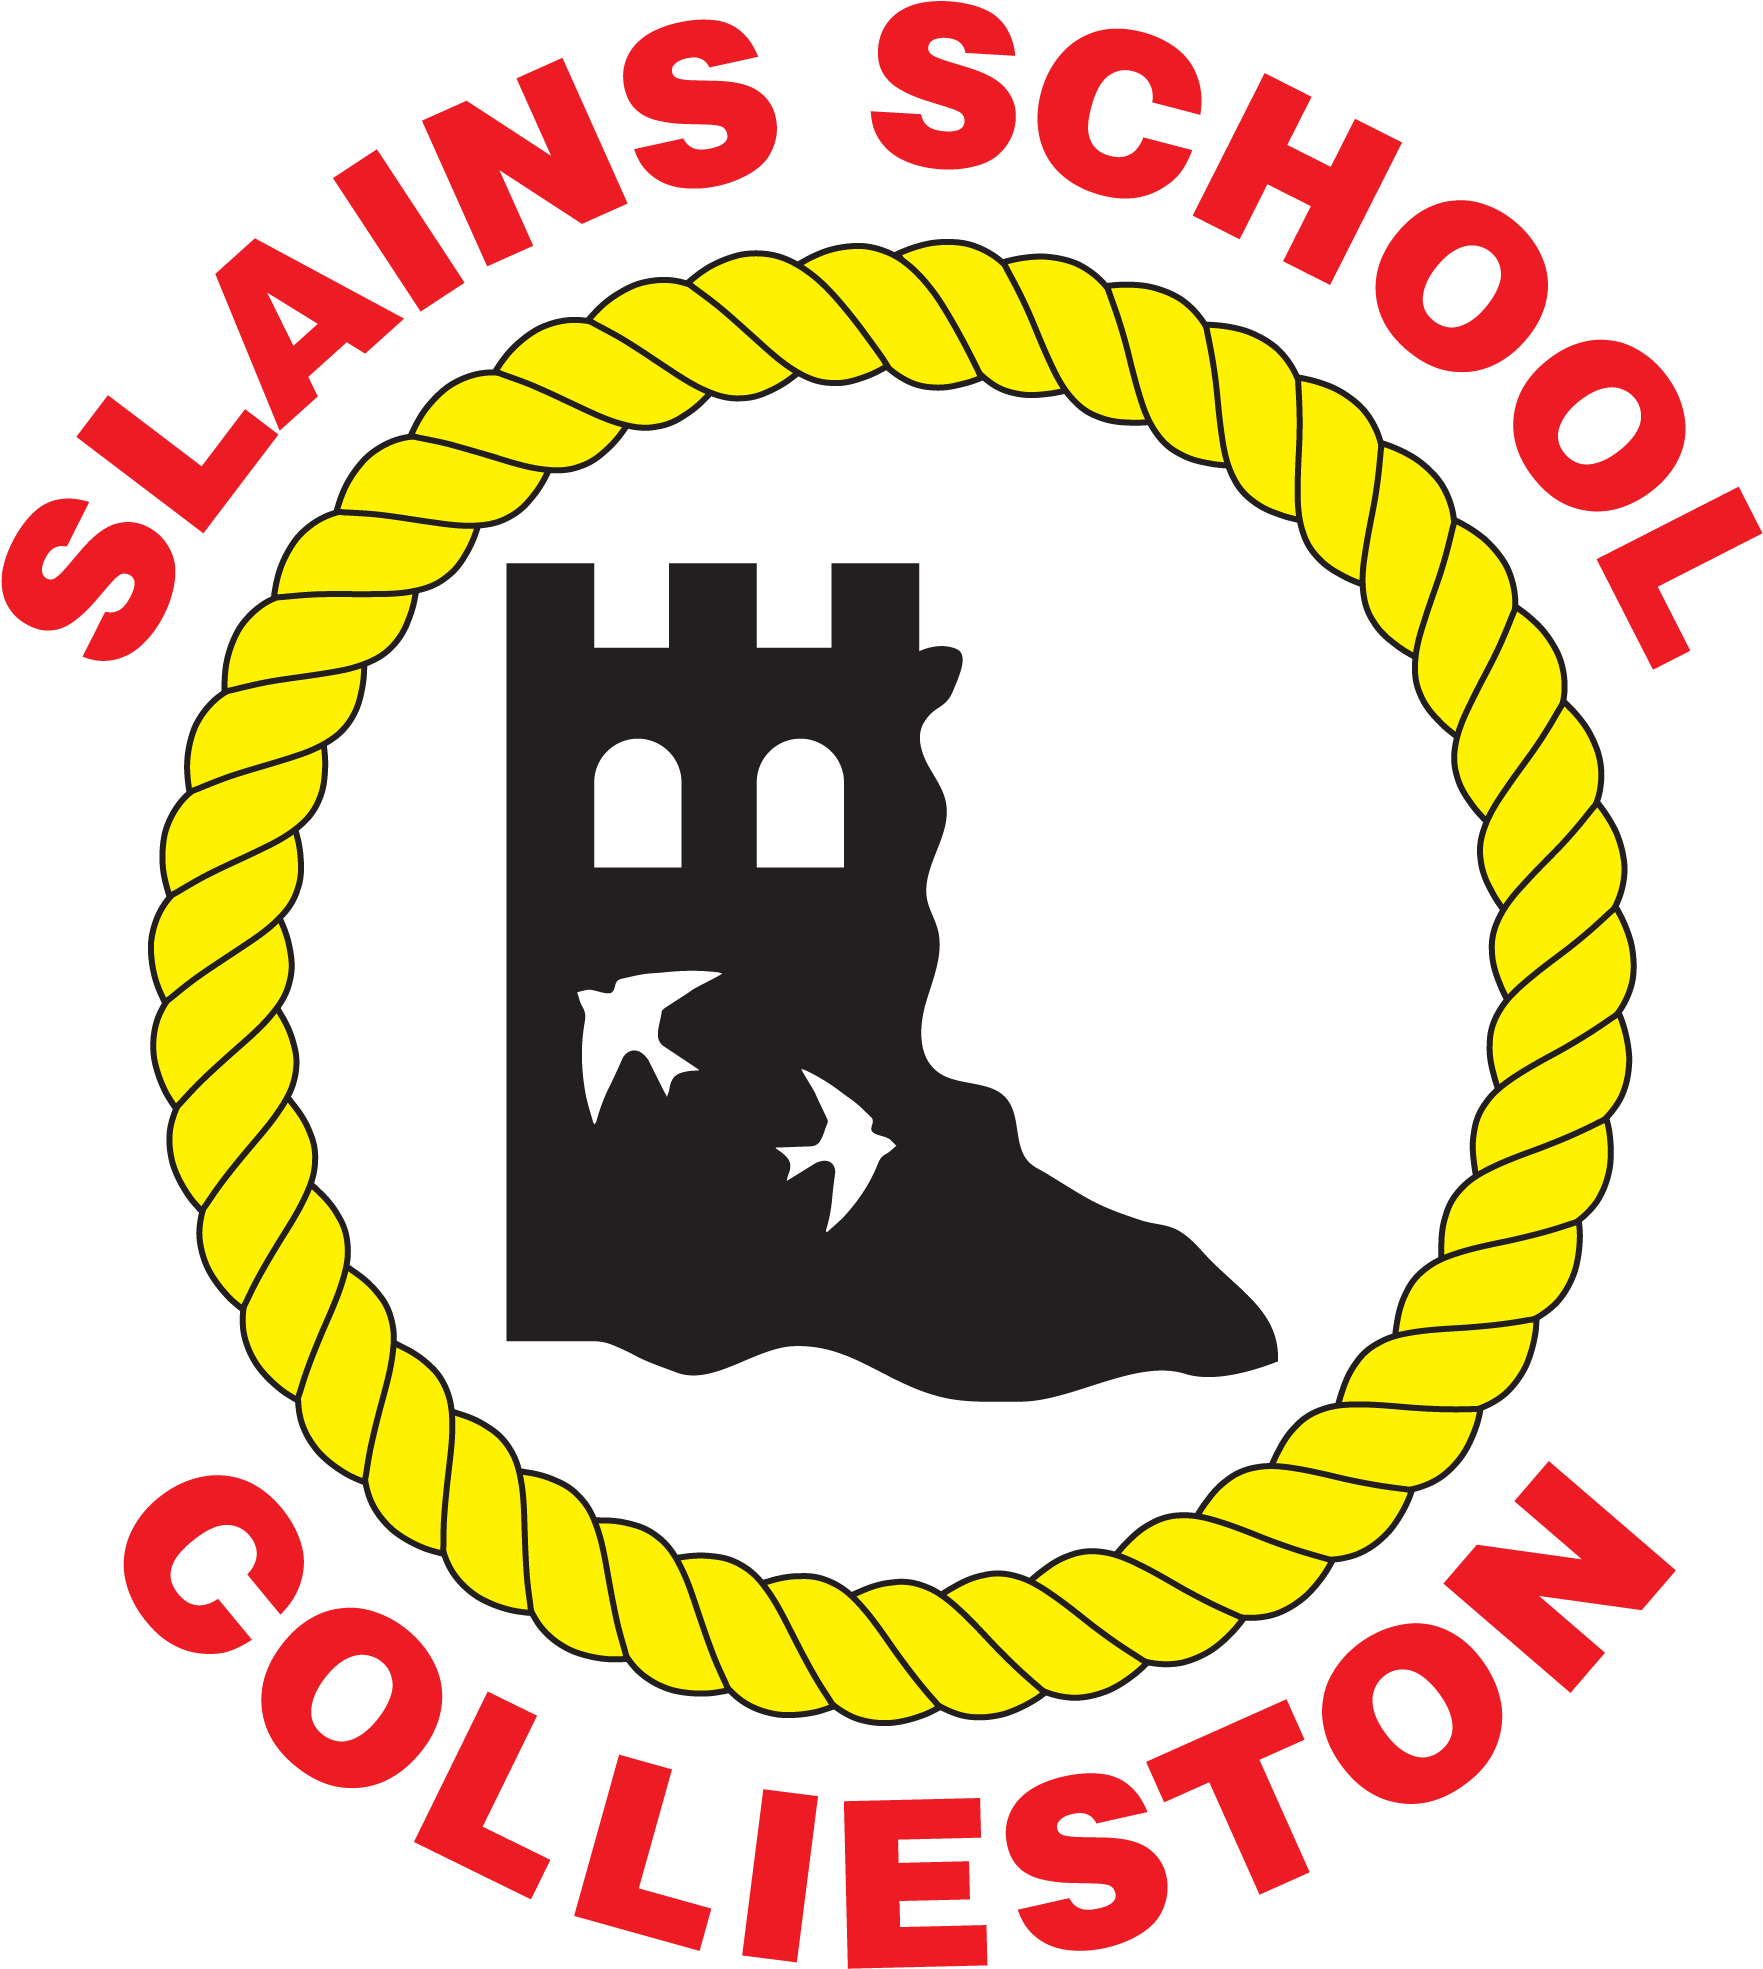 Slains School Logo - Angeles Unified School District (1882x2054)